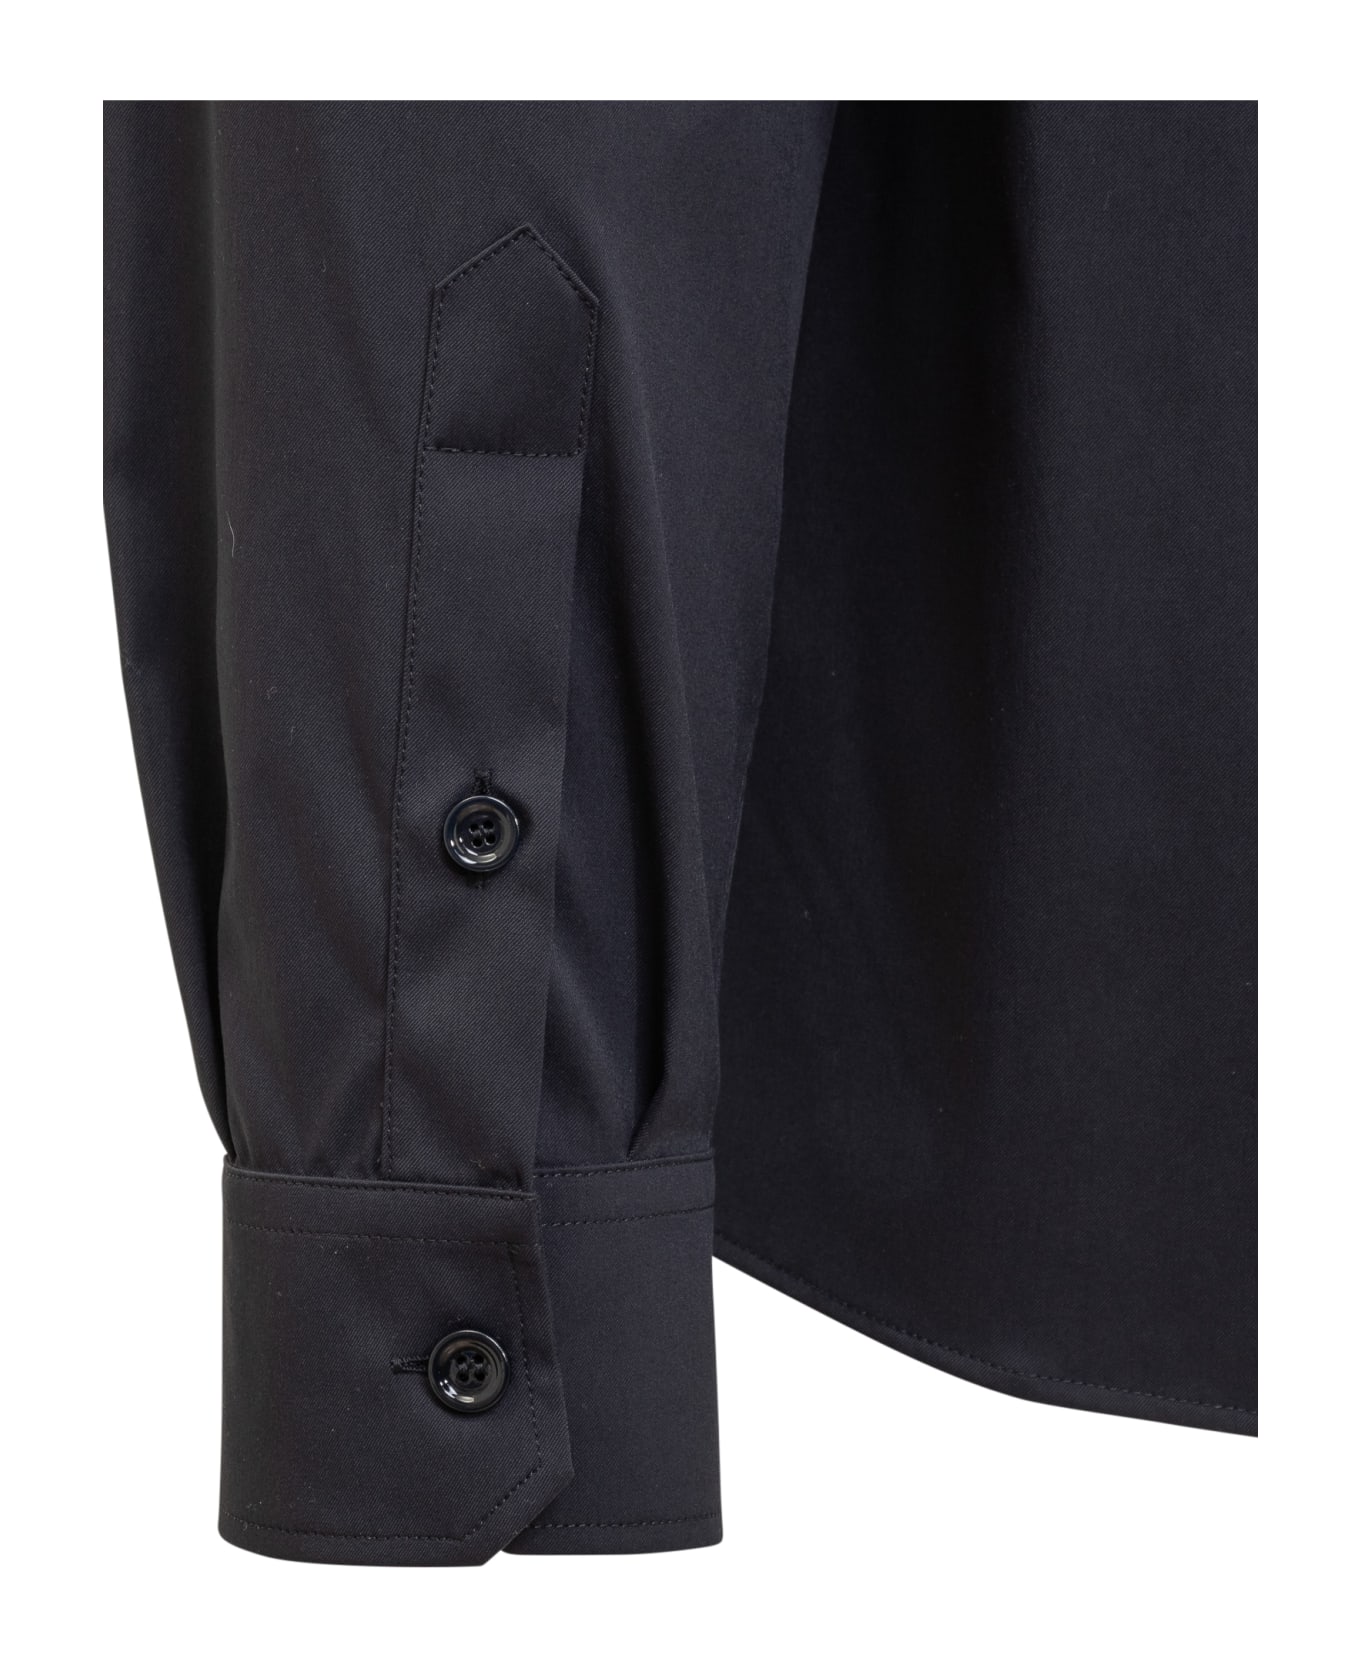 Dolce & Gabbana Technical Fabric Shirt - BLU SCURISSIMO 5